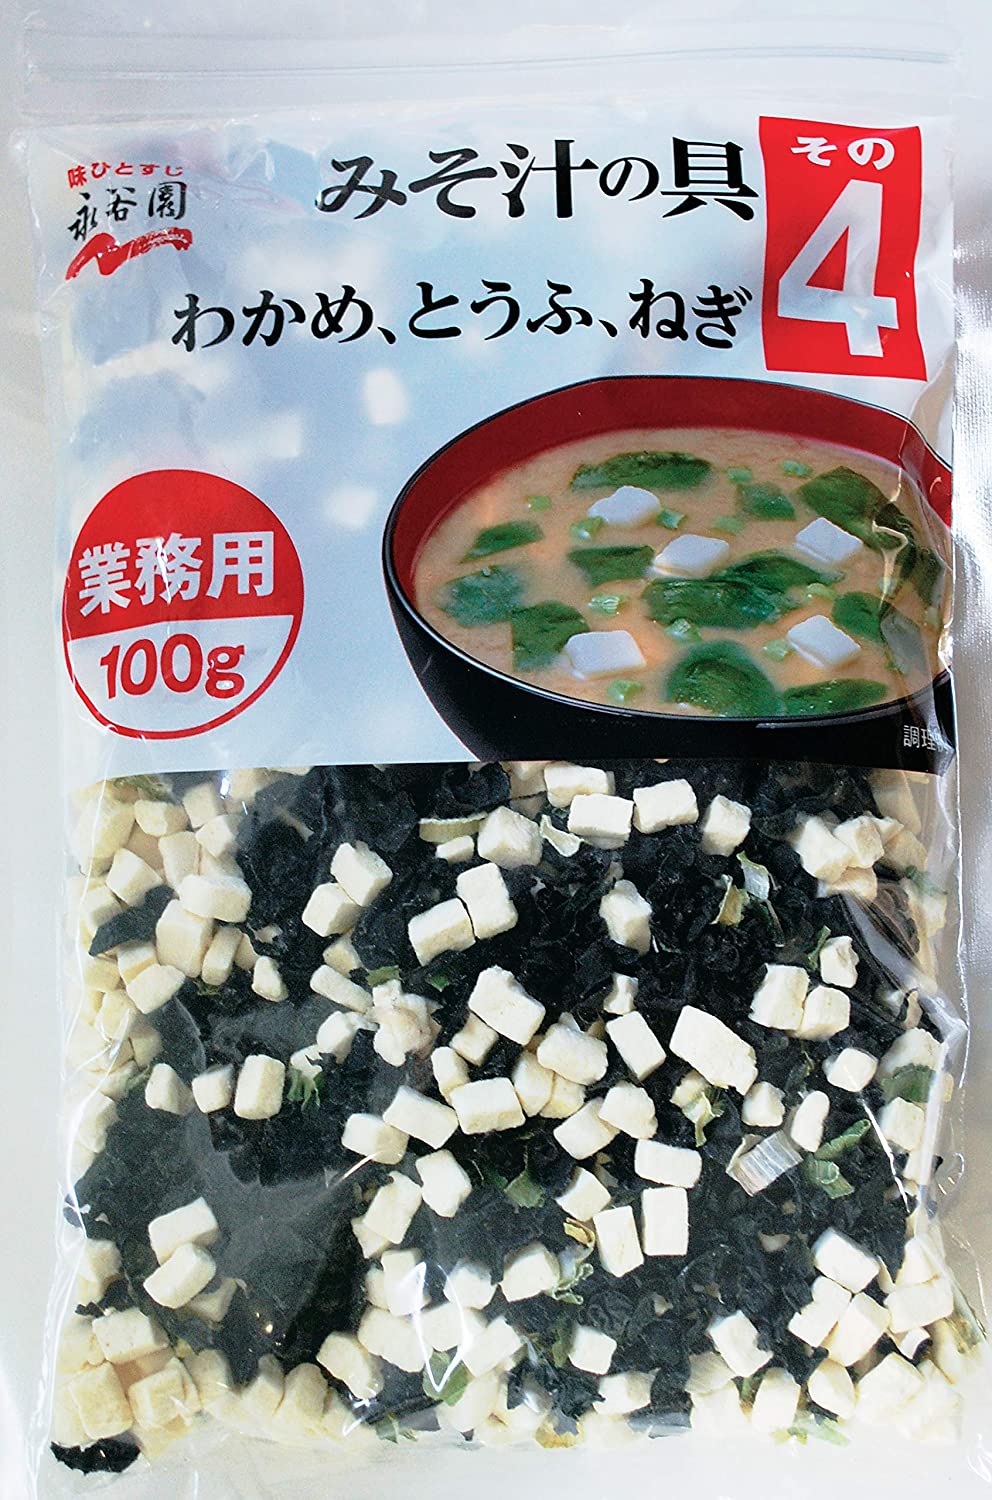 MISO Soup - filling for miso soup, 100 servings, 100 g.